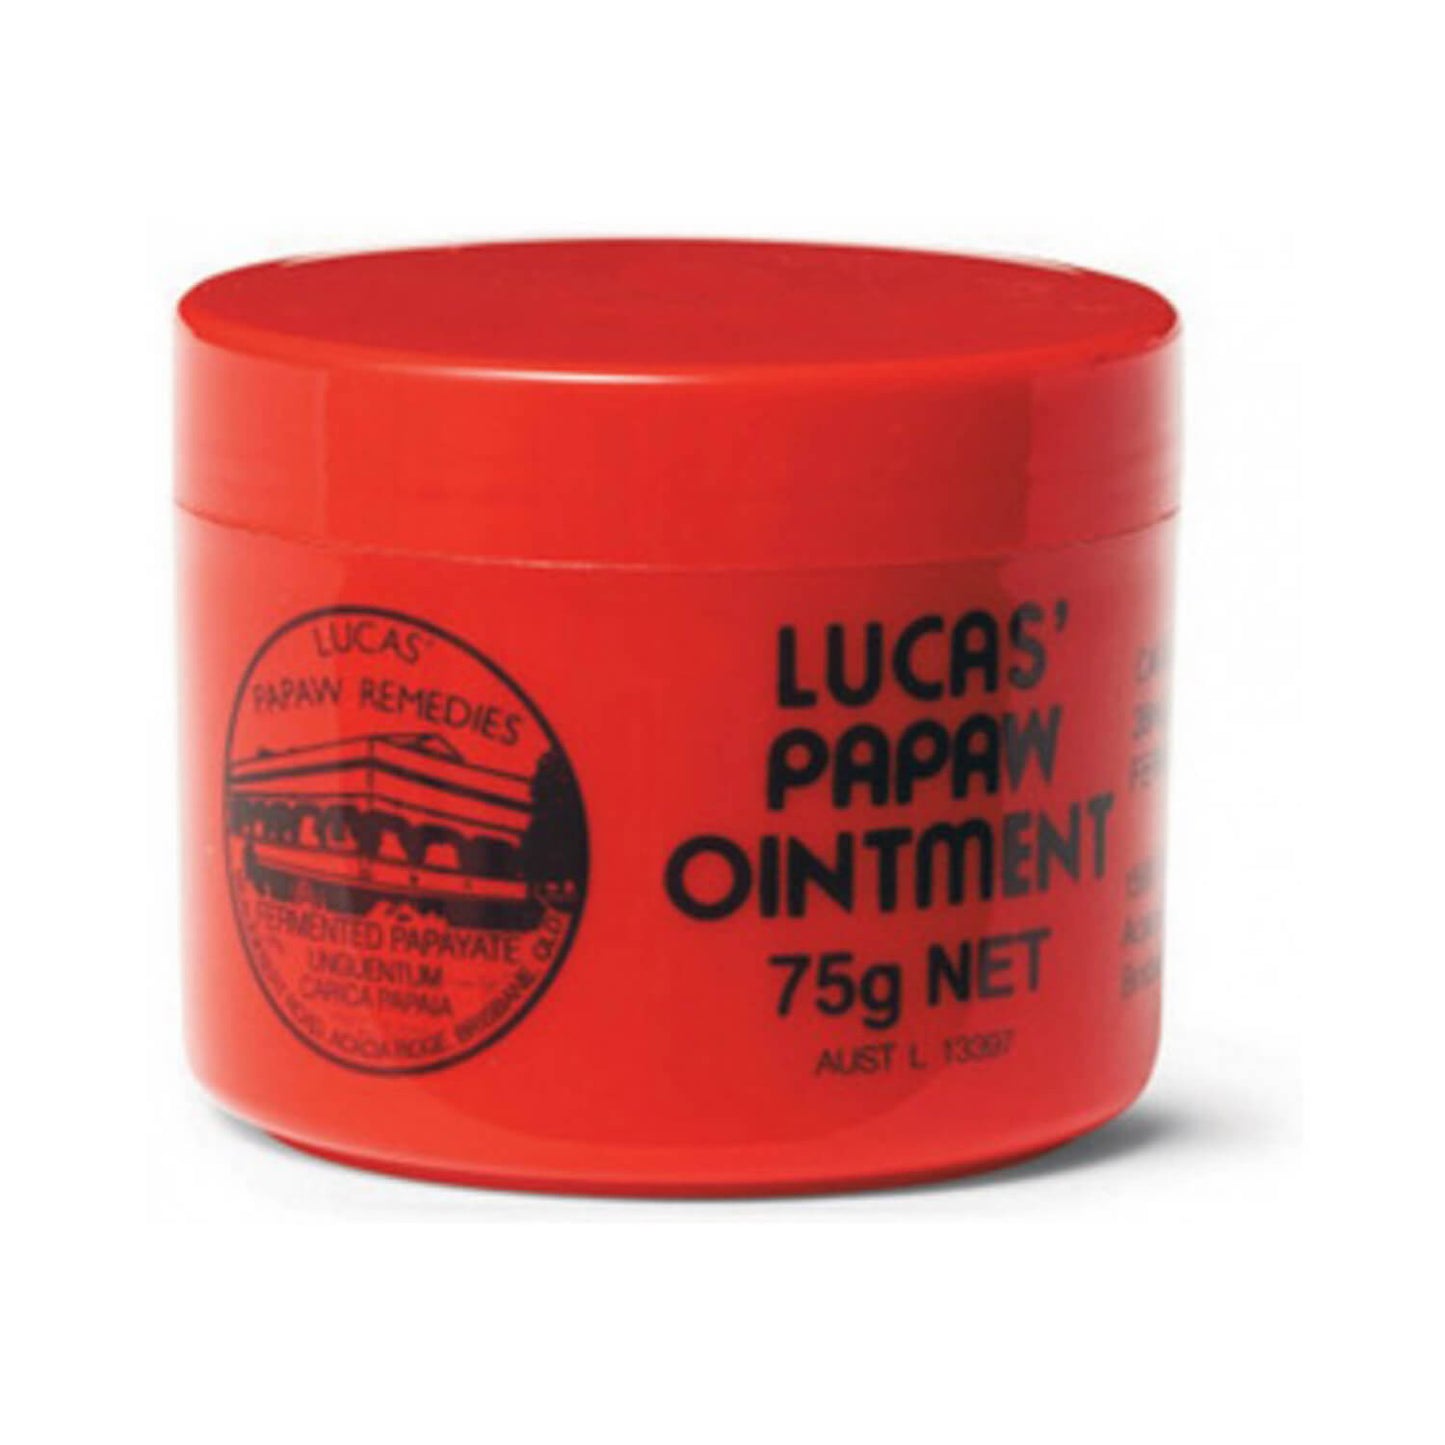 Lucas Papaw Ointment 75 g Jar